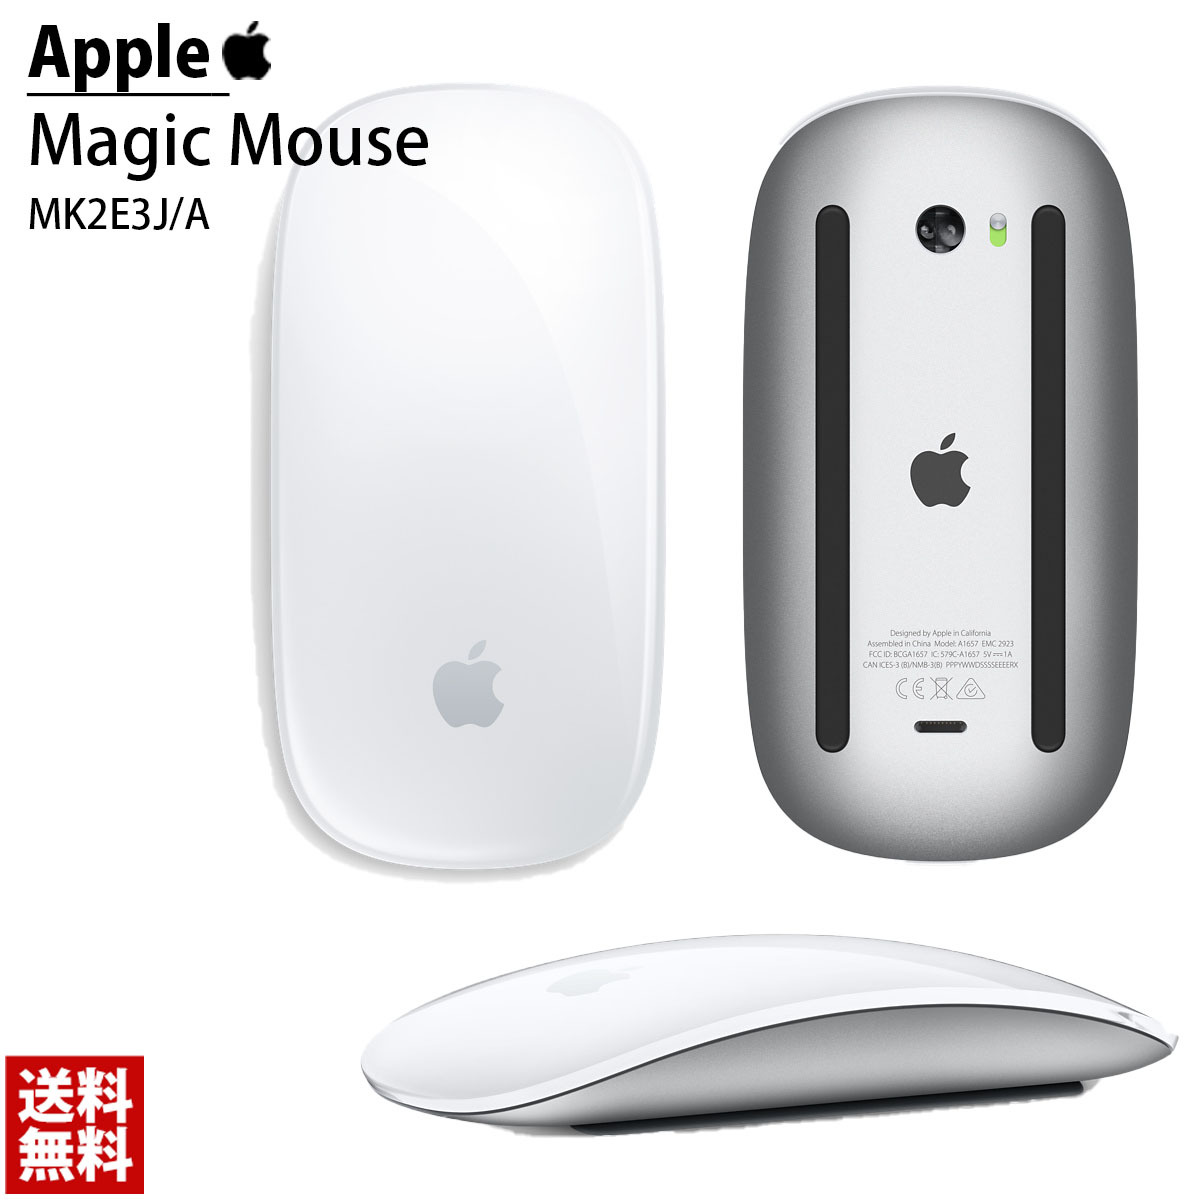 Apple 正規品 アップル マジックマウス MK2E3J/A Bluetooth OS X